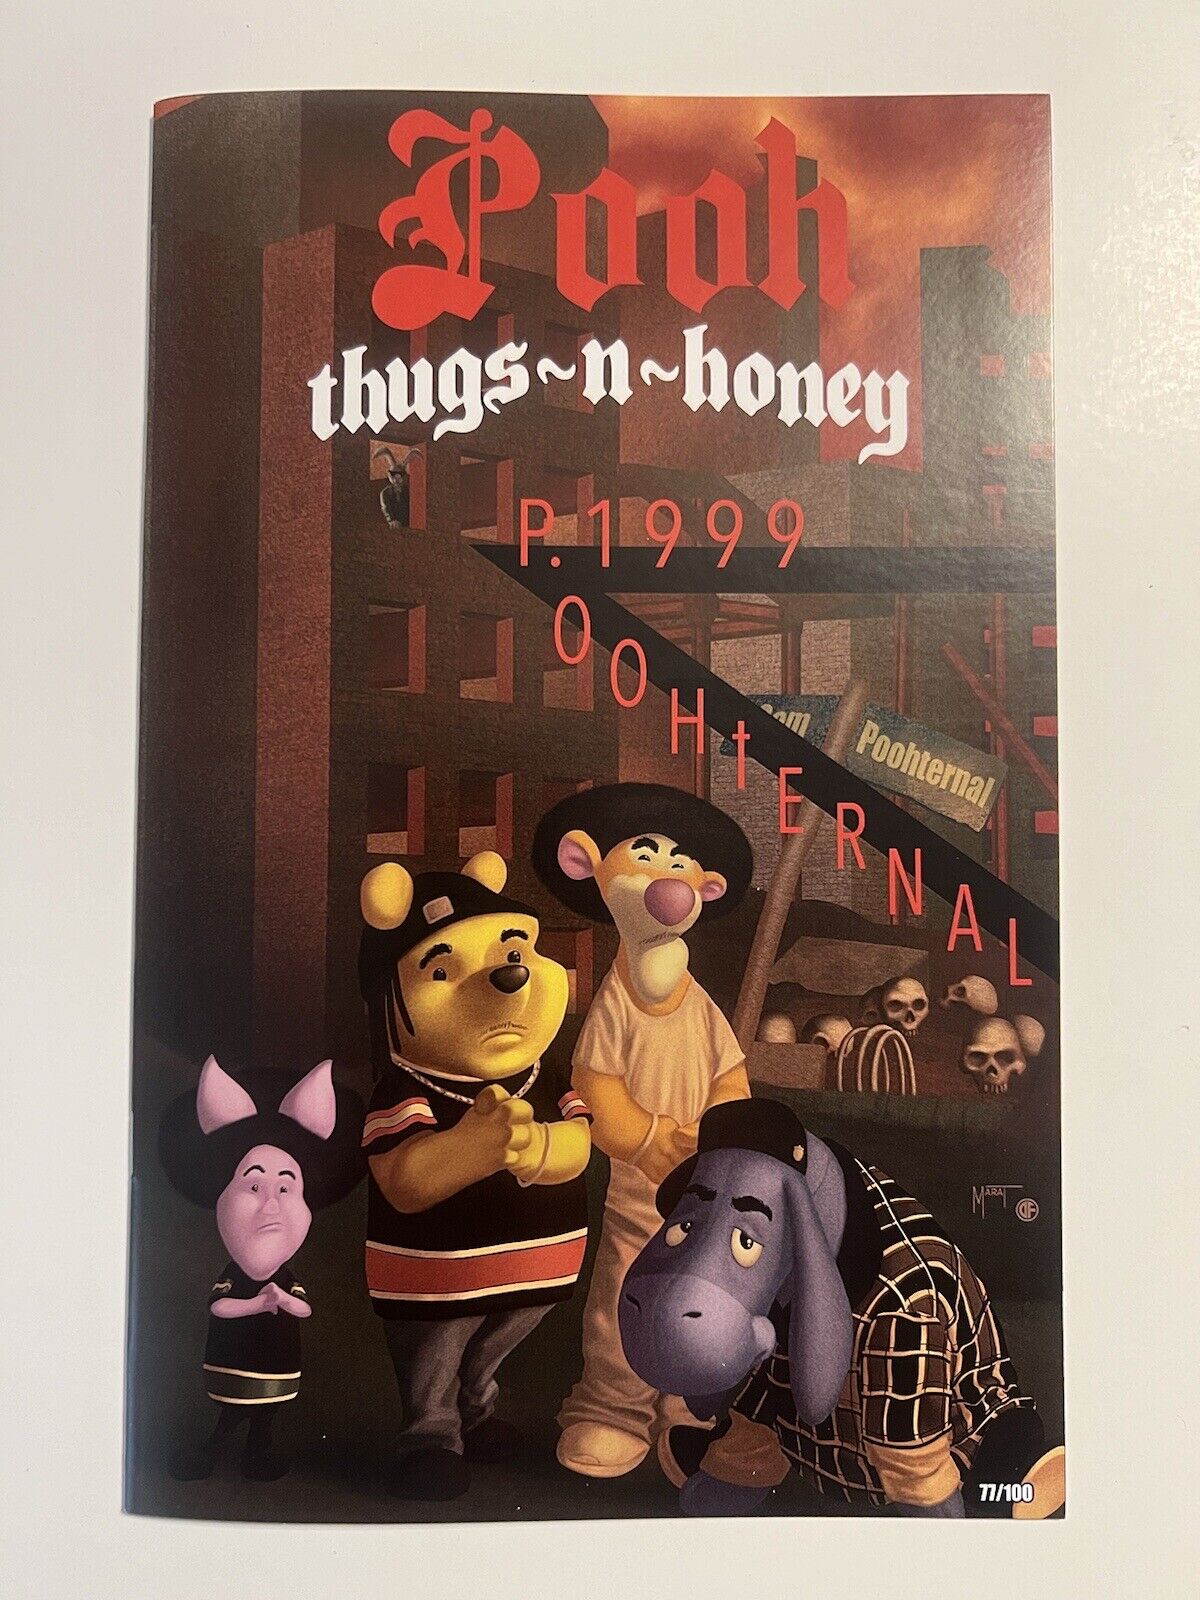 Do You Pooh -POOH Thugs N Honey -p.1999 Poohternal 77/100 